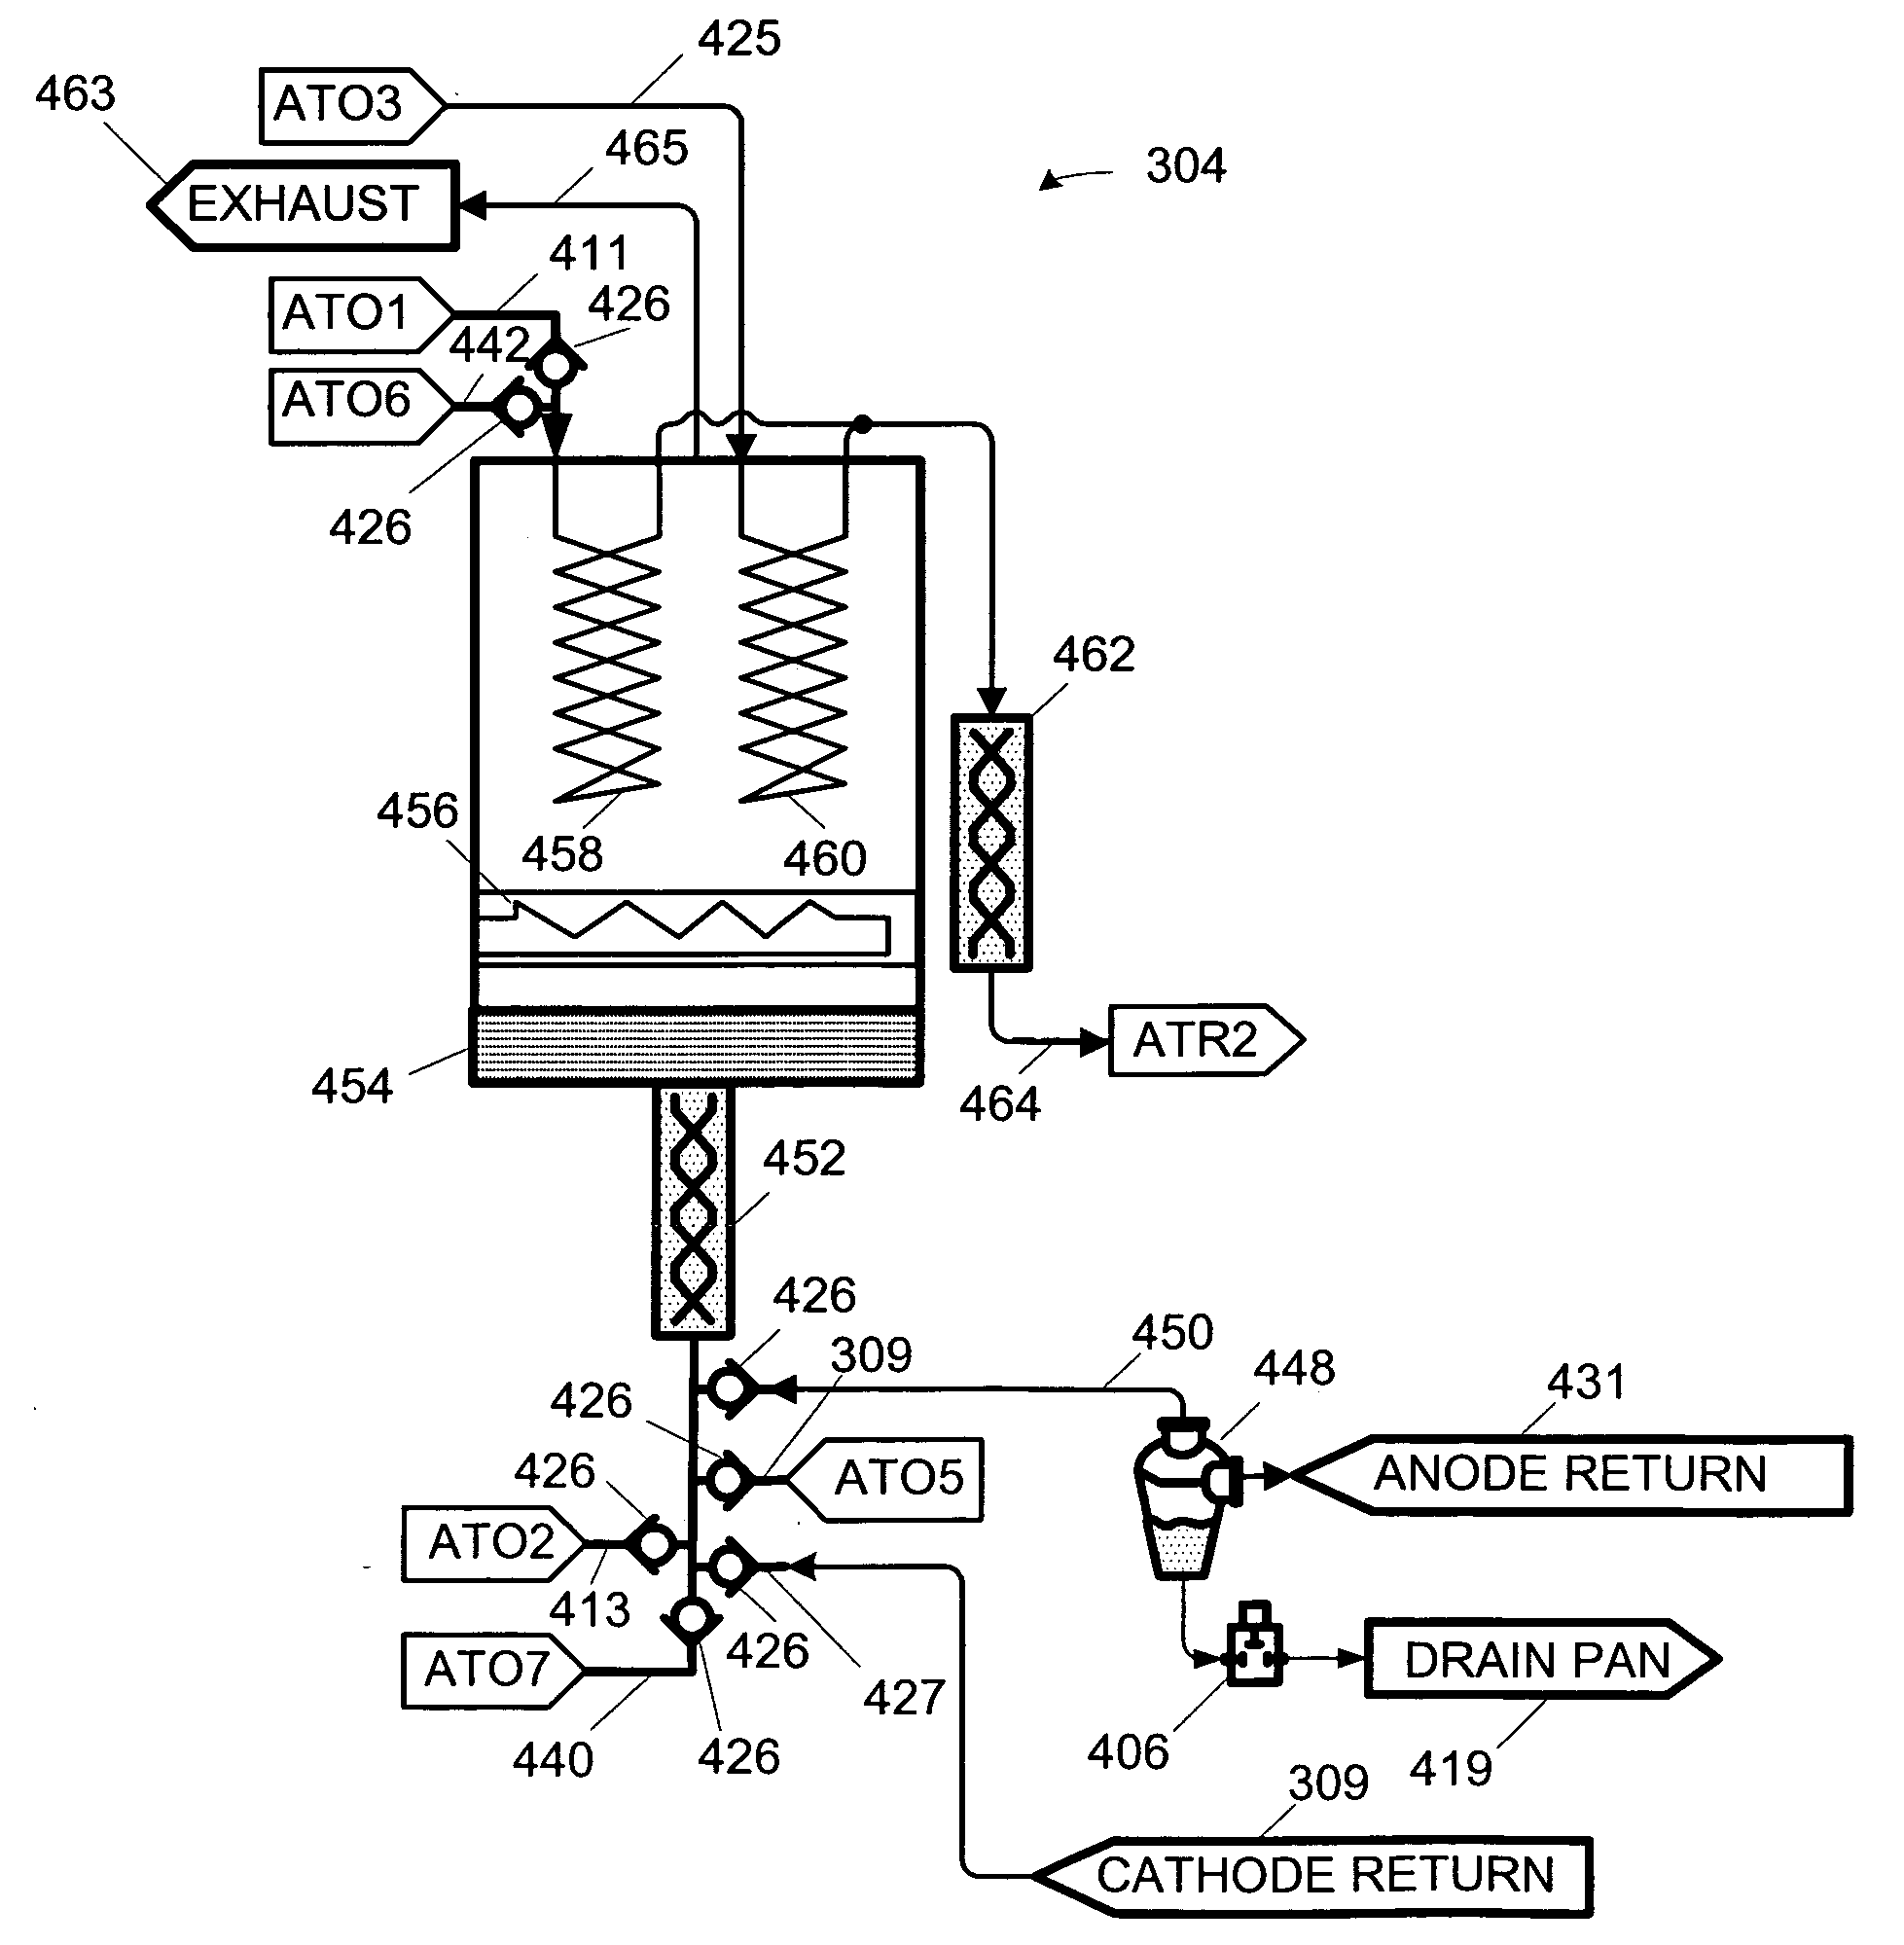 Control system for a hydrogen generator